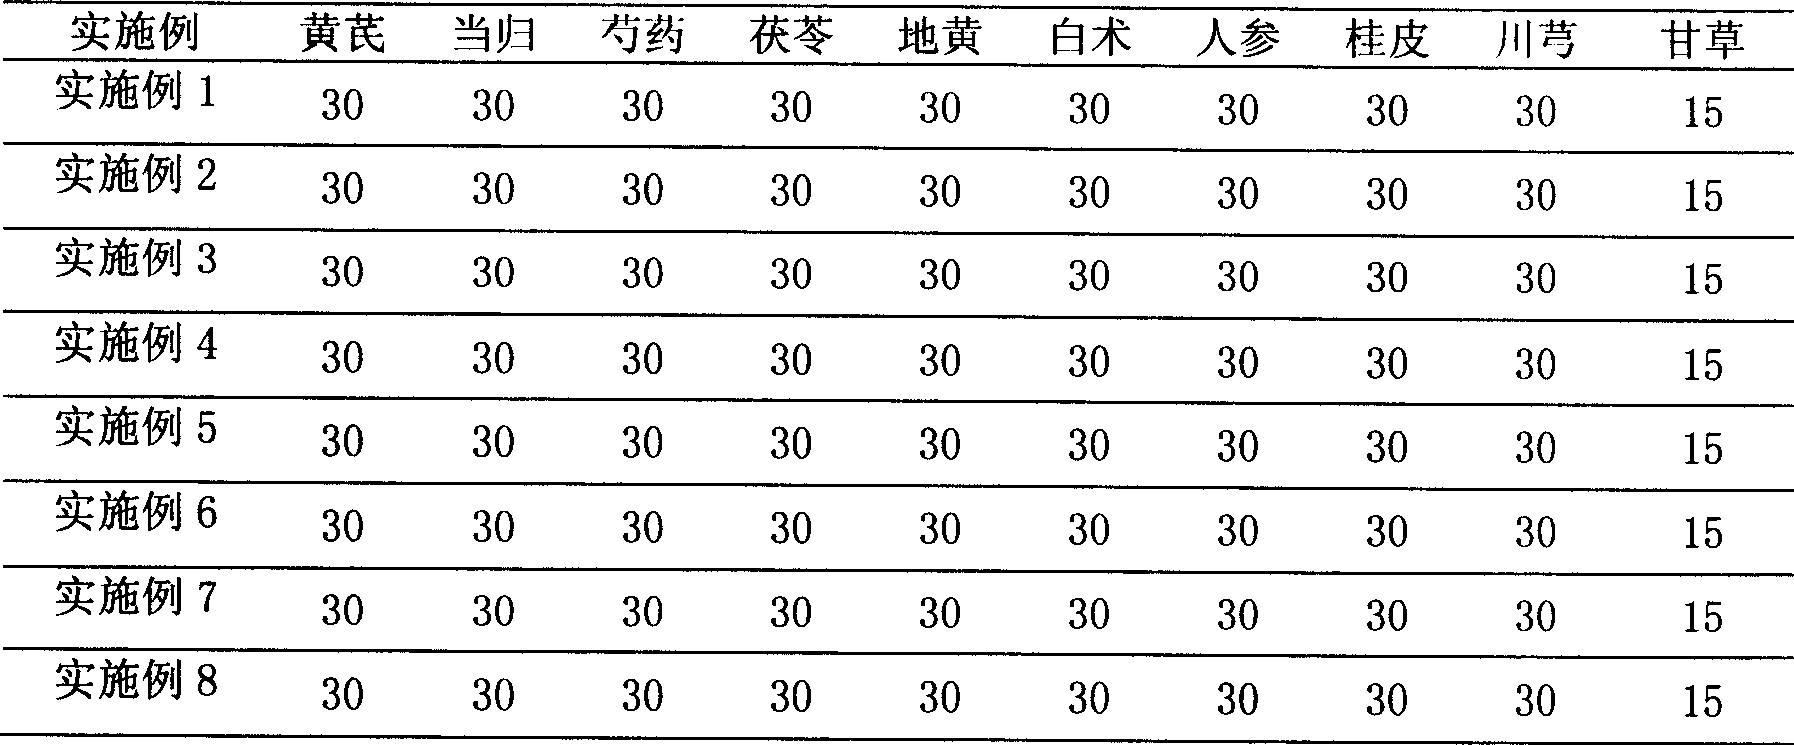 Preparation method of traditional Chinese medicine preparation